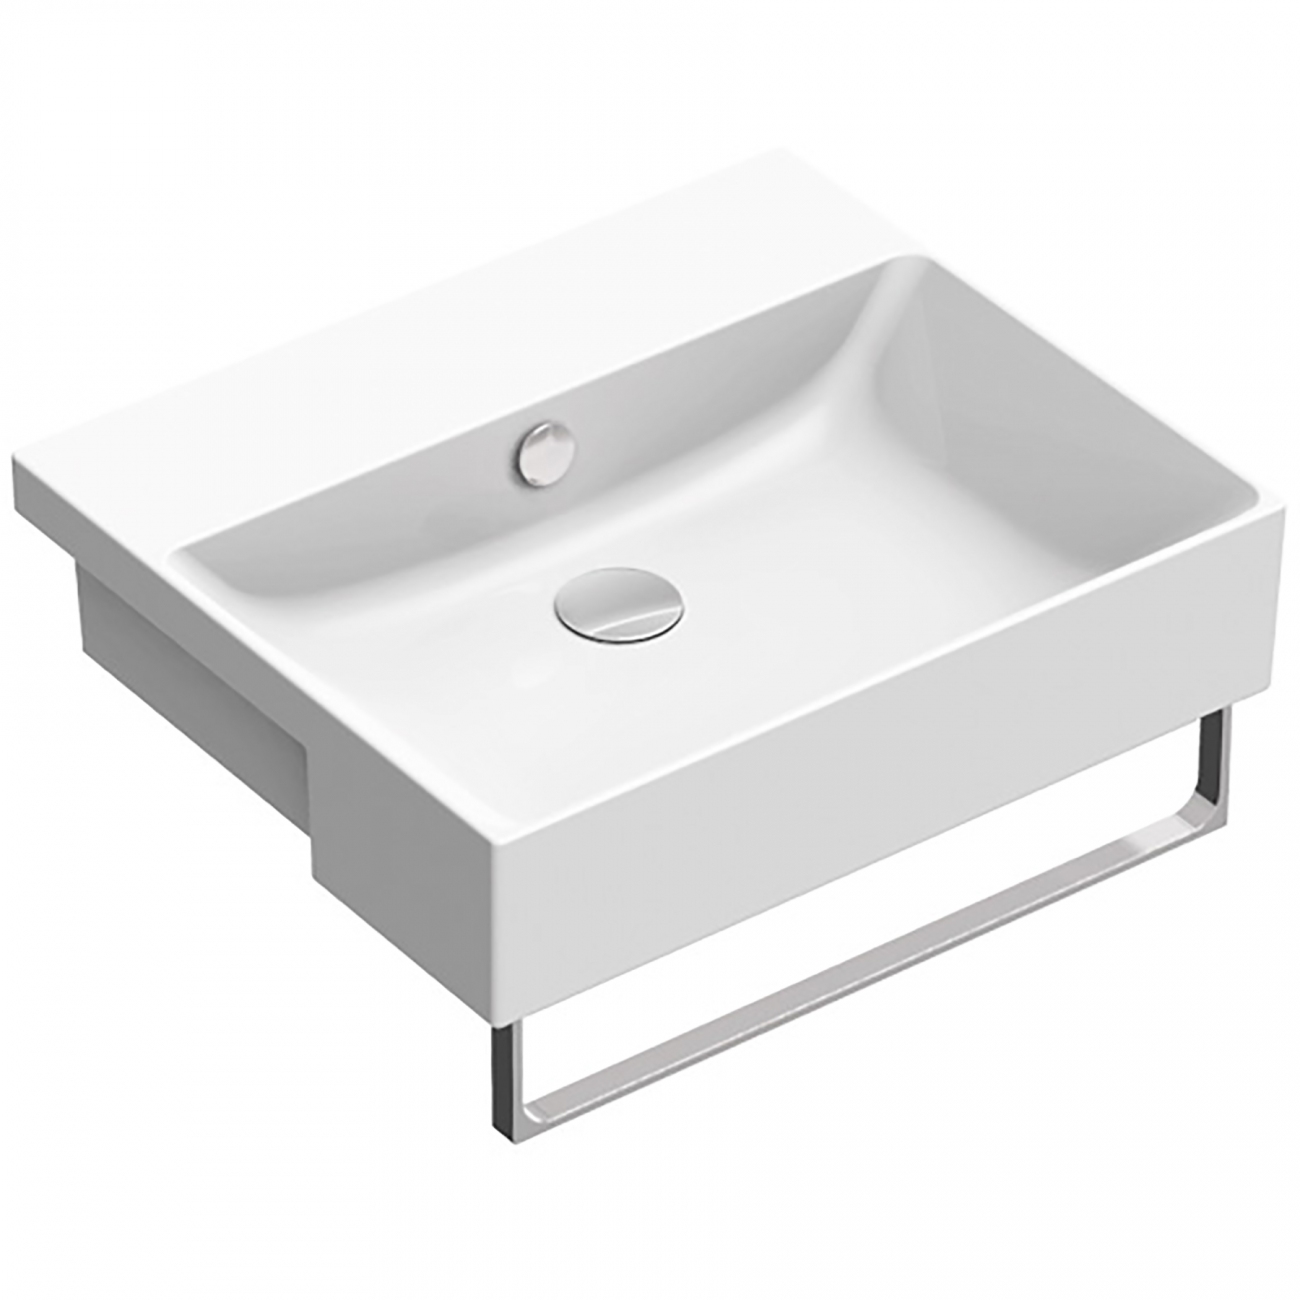 Catalano New Zero semi-encased washbasin